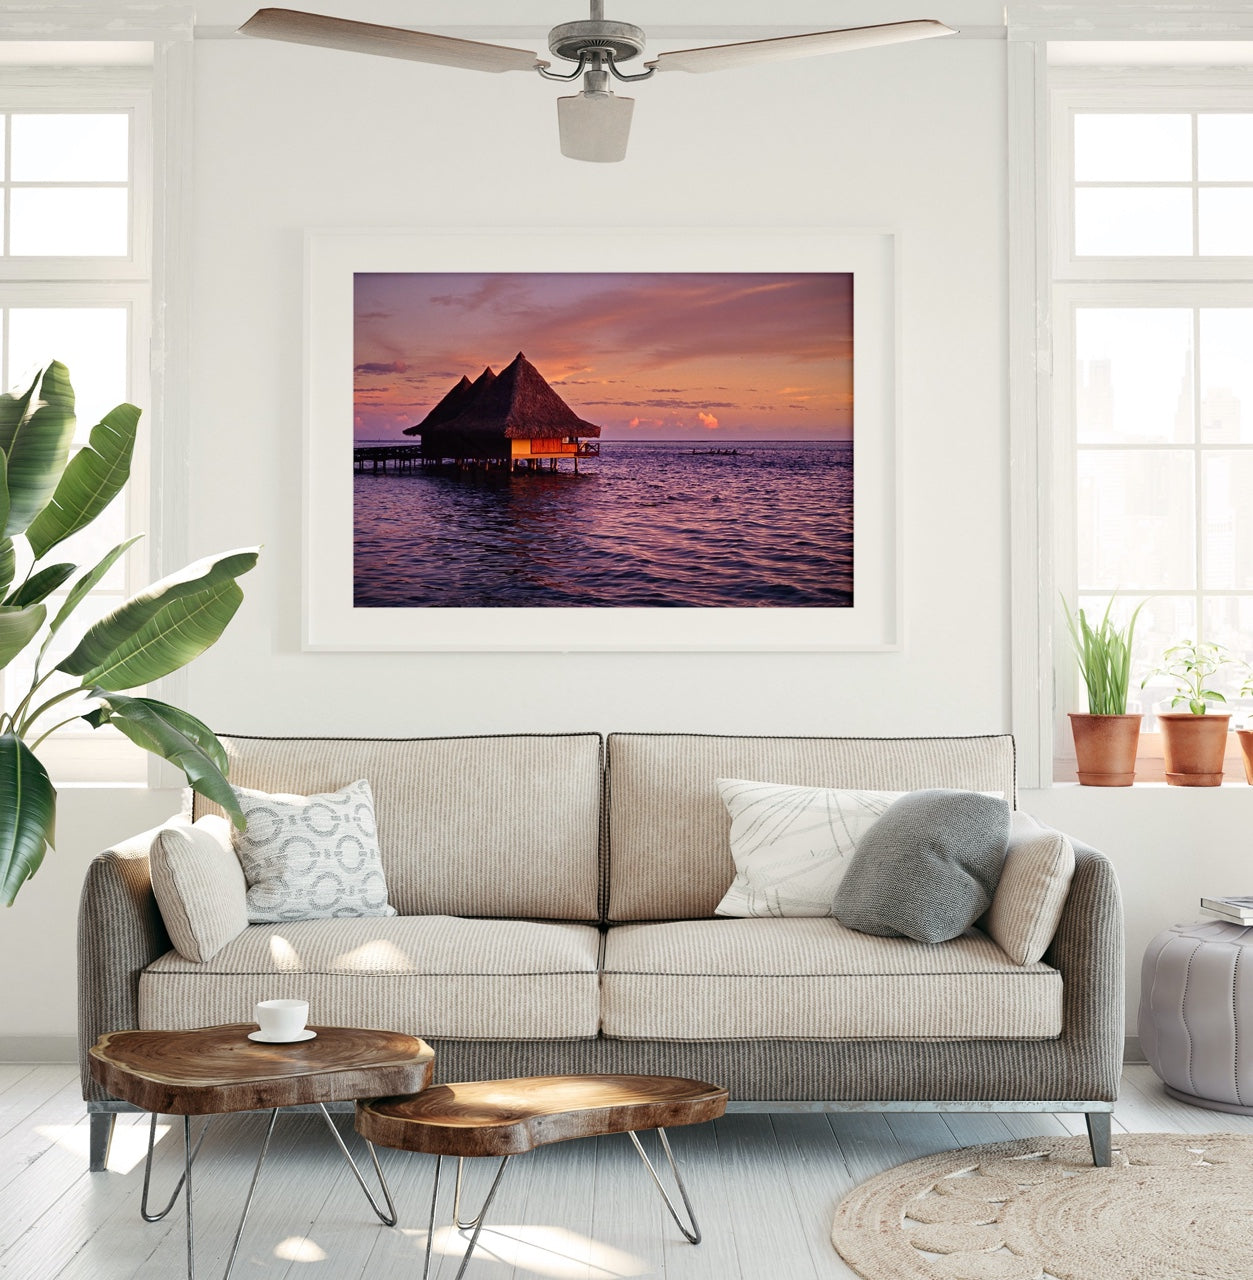 Fine Art Prints - "Tahitian Sunset" | Landscape Photography Print